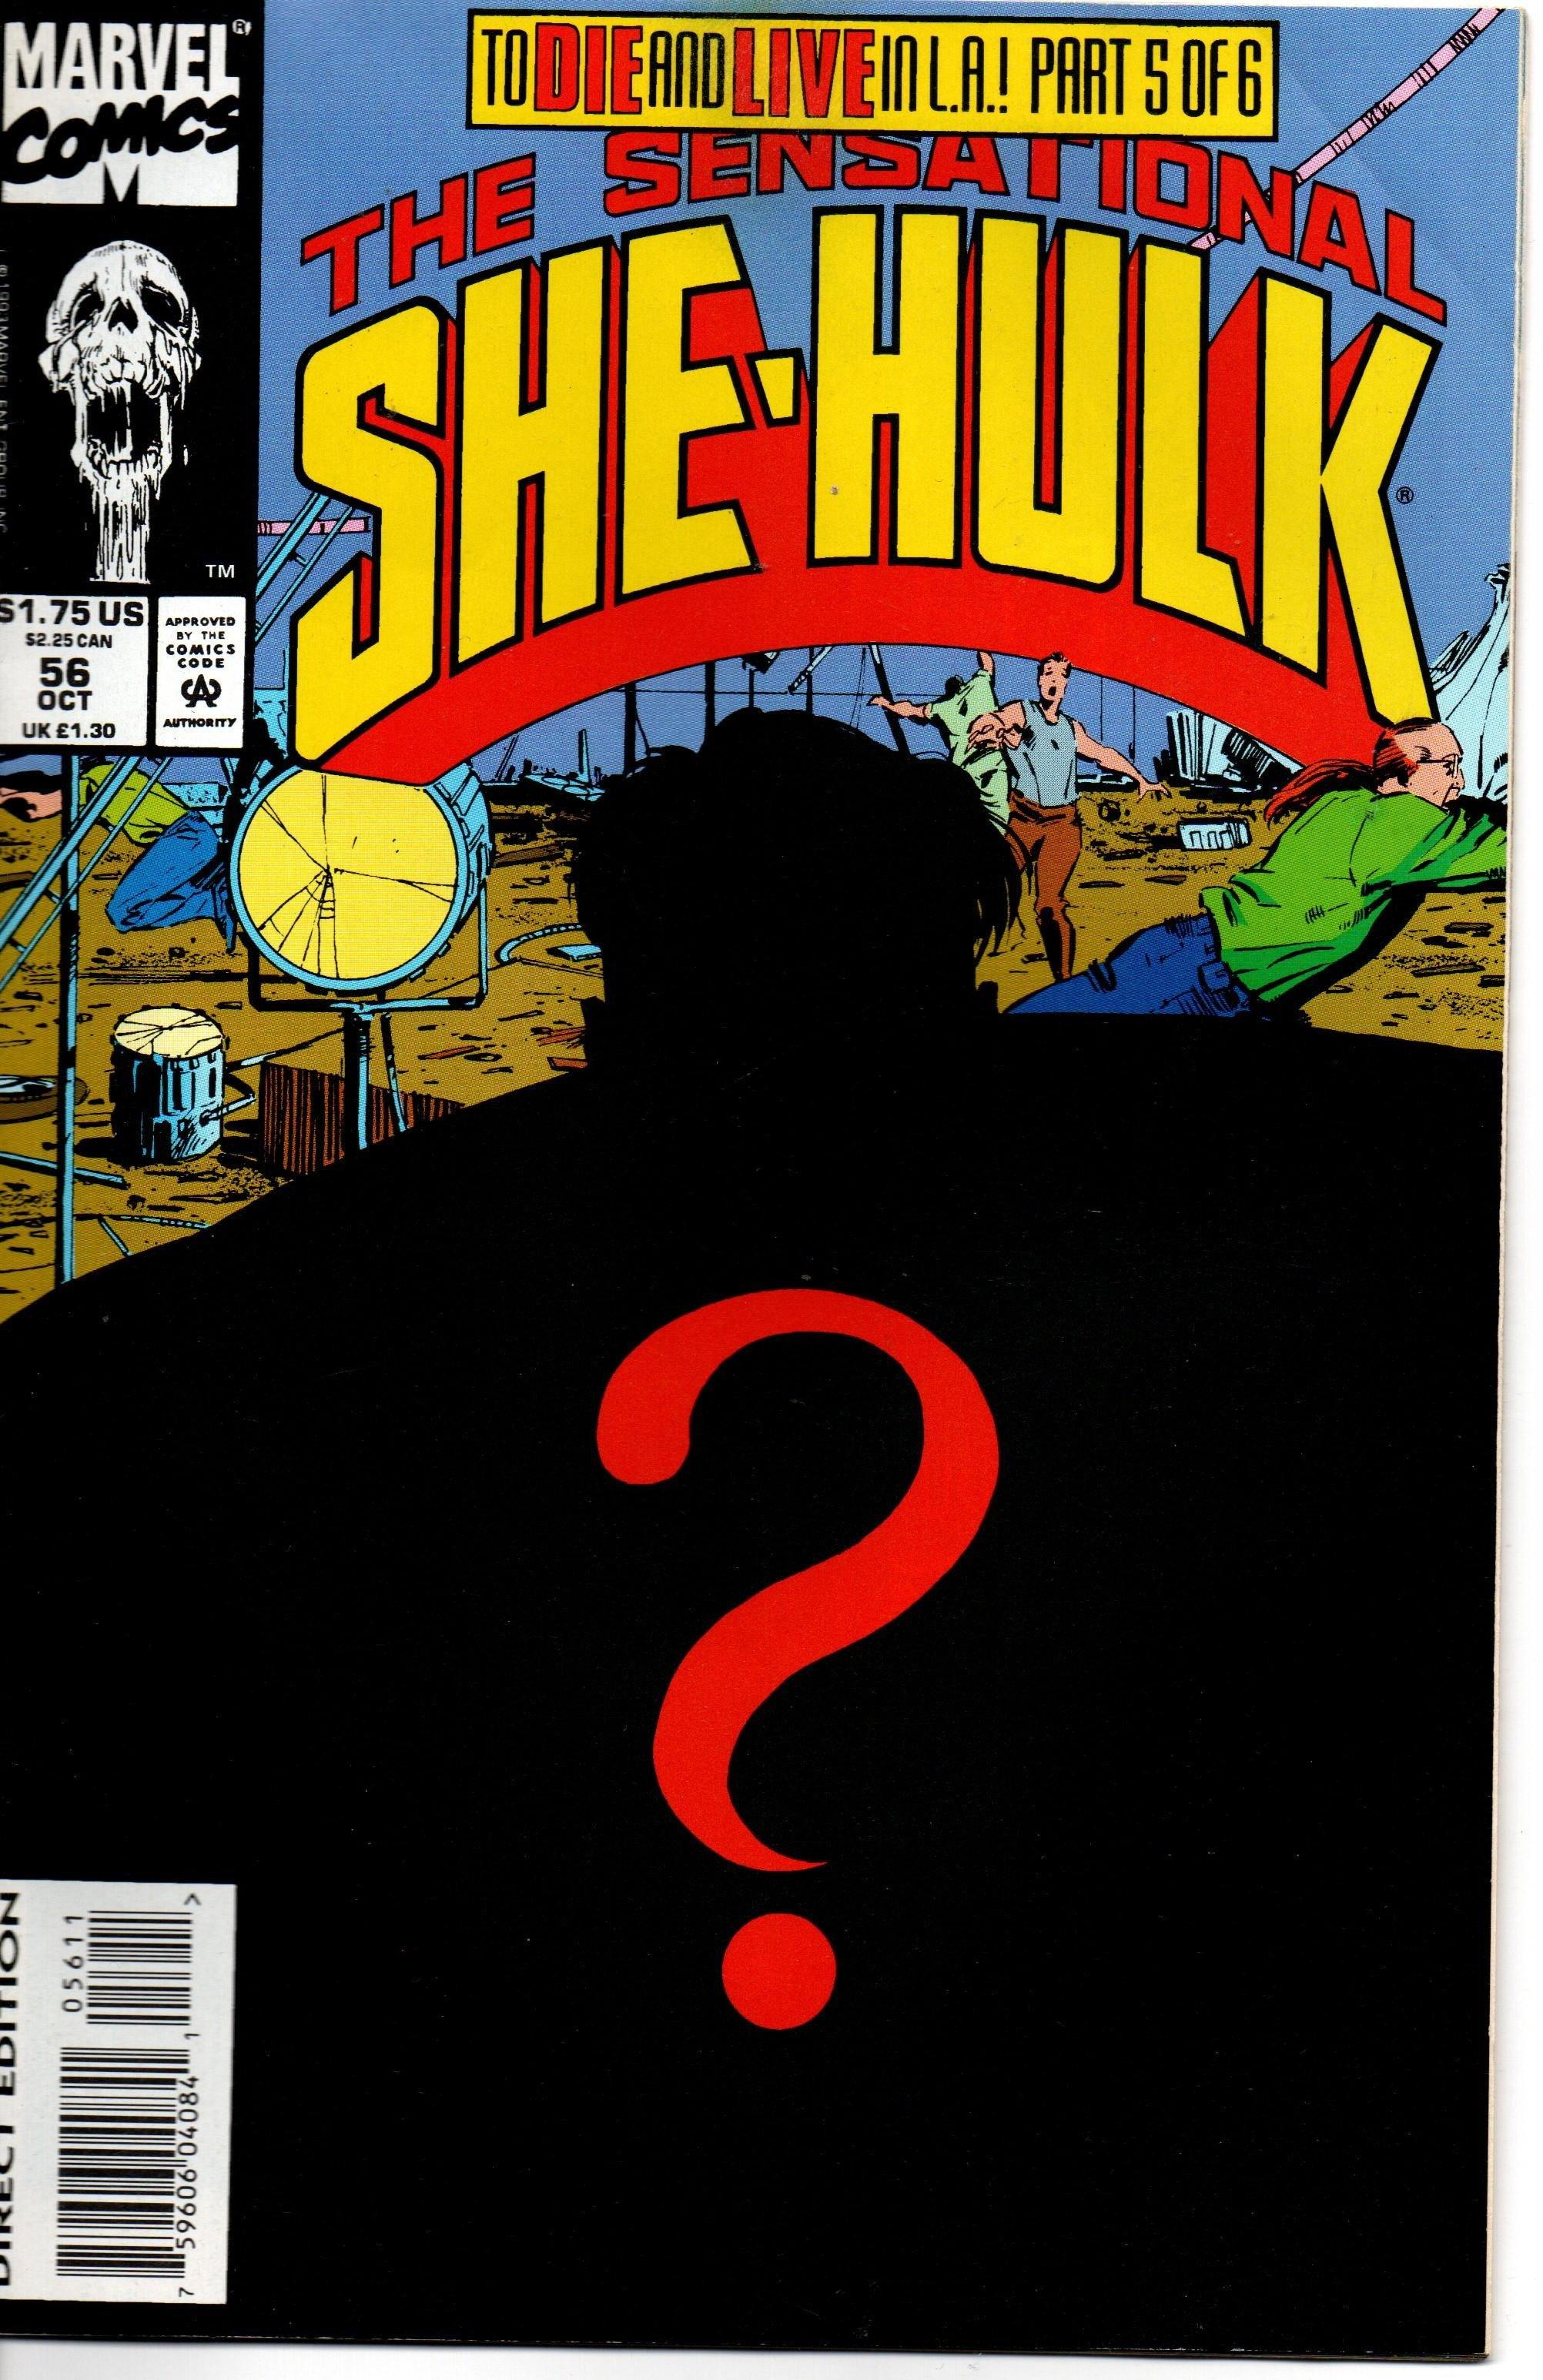 SENSATIONAL SHE-HULK # 56 (1989) OCT 1993 [USED]